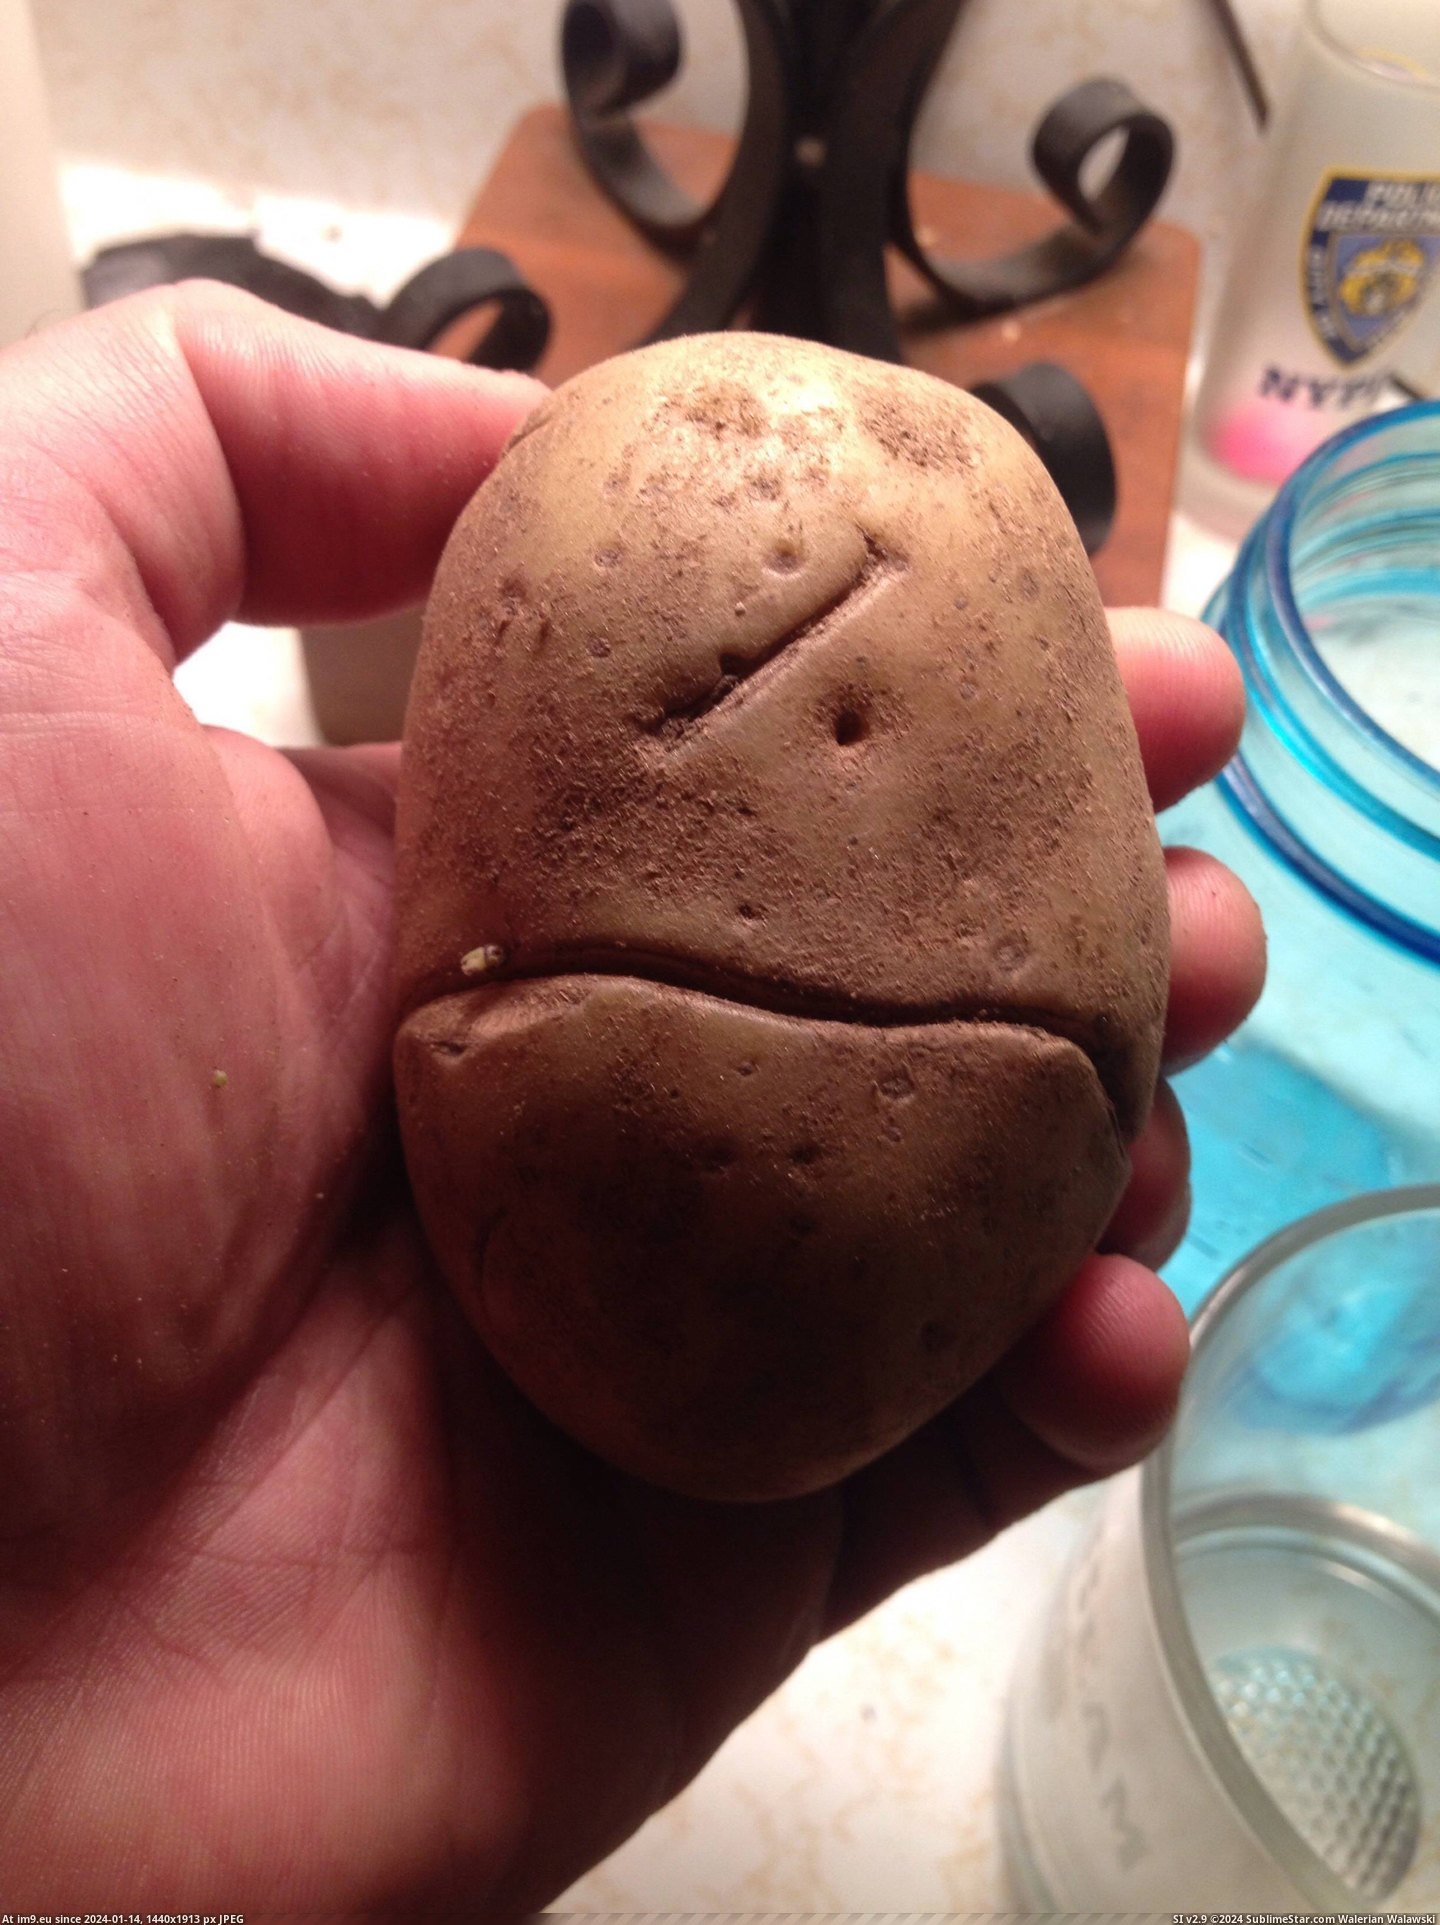 #One #Park #Potato #Eyed #South #Canadian [Mildlyinteresting] This potato looks like a one-eyed Canadian from South Park. Pic. (Obraz z album My r/MILDLYINTERESTING favs))